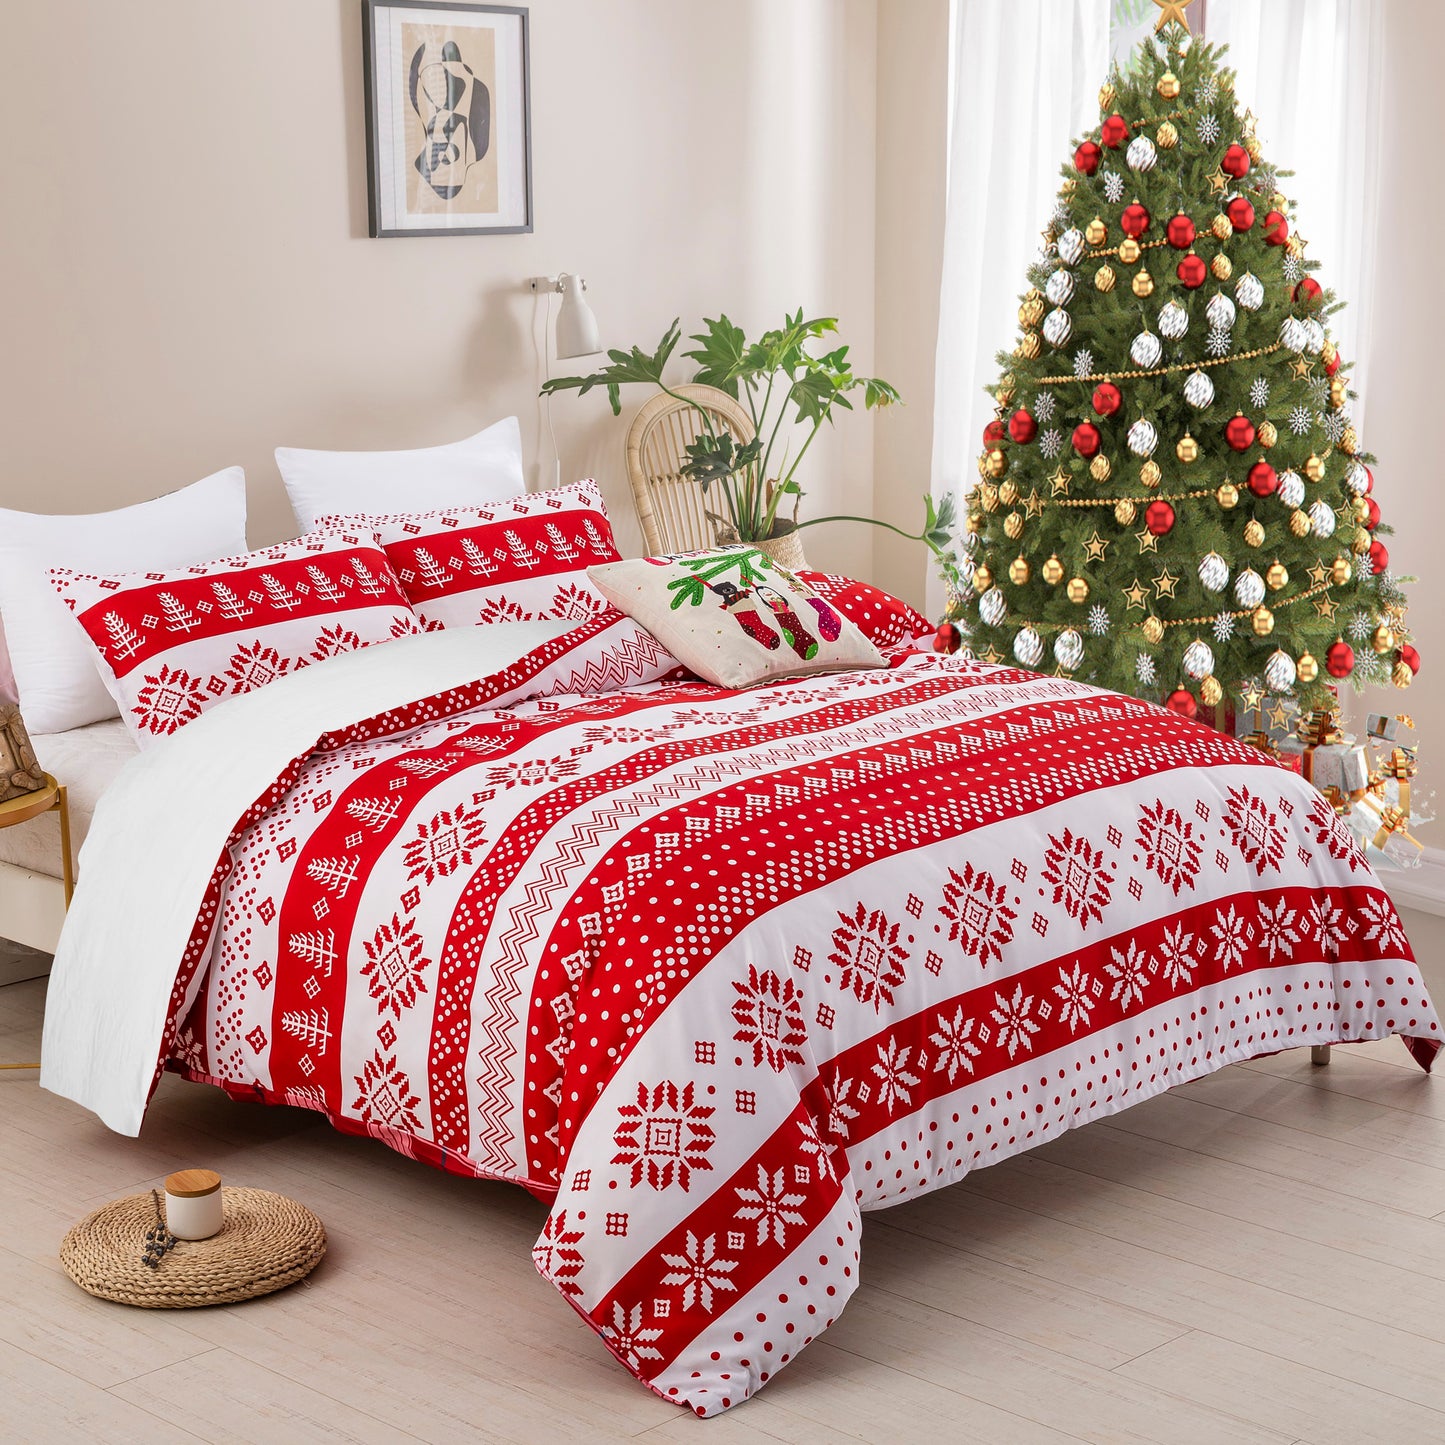 WONGS BEDDING Christmas Elements Style Red Duvet Cover Pillowcase Set